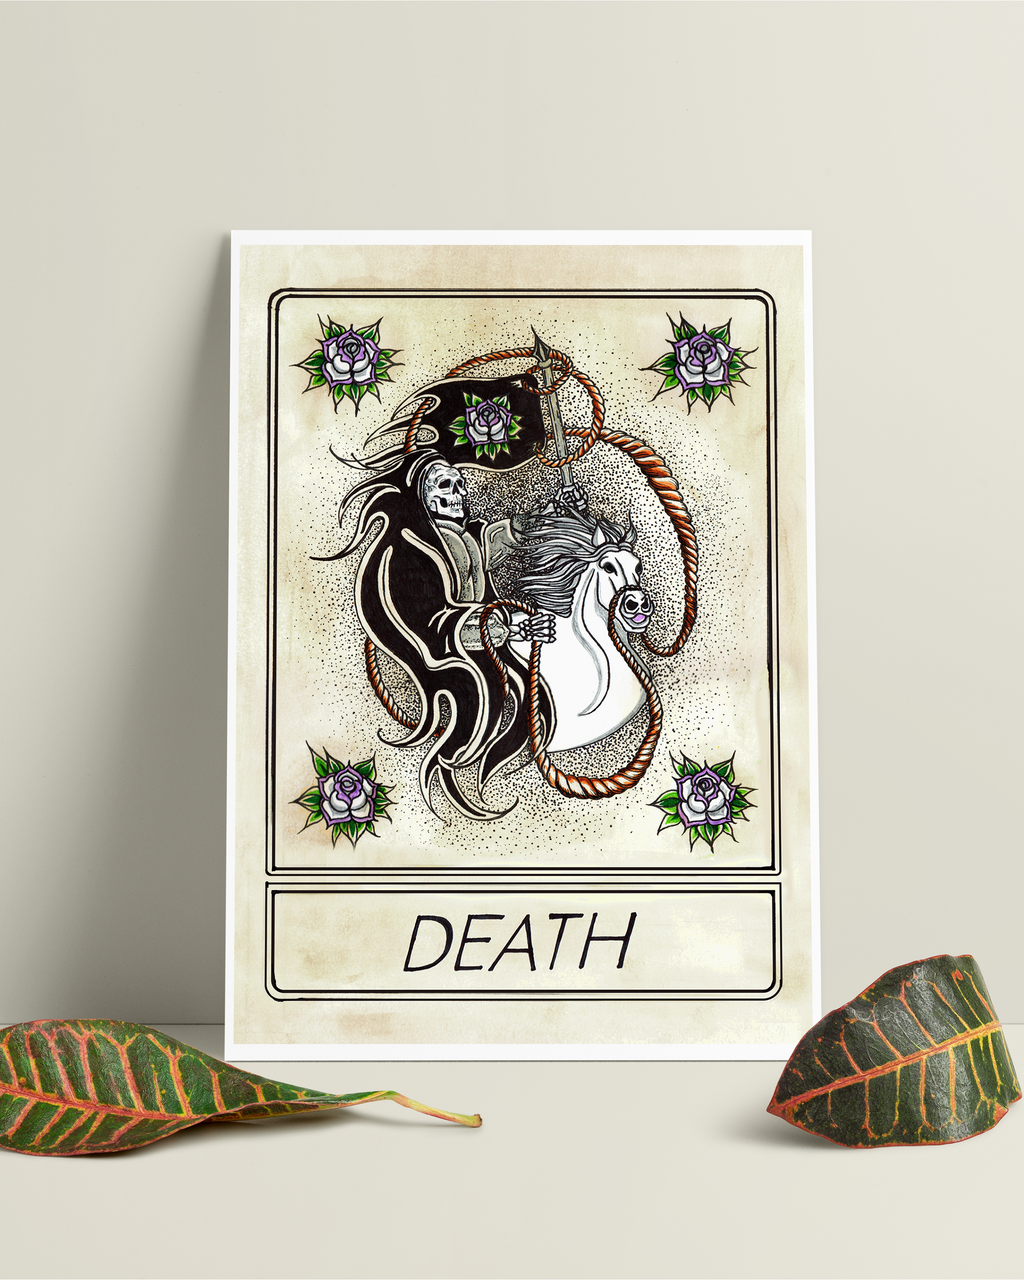 Death - Poster Print